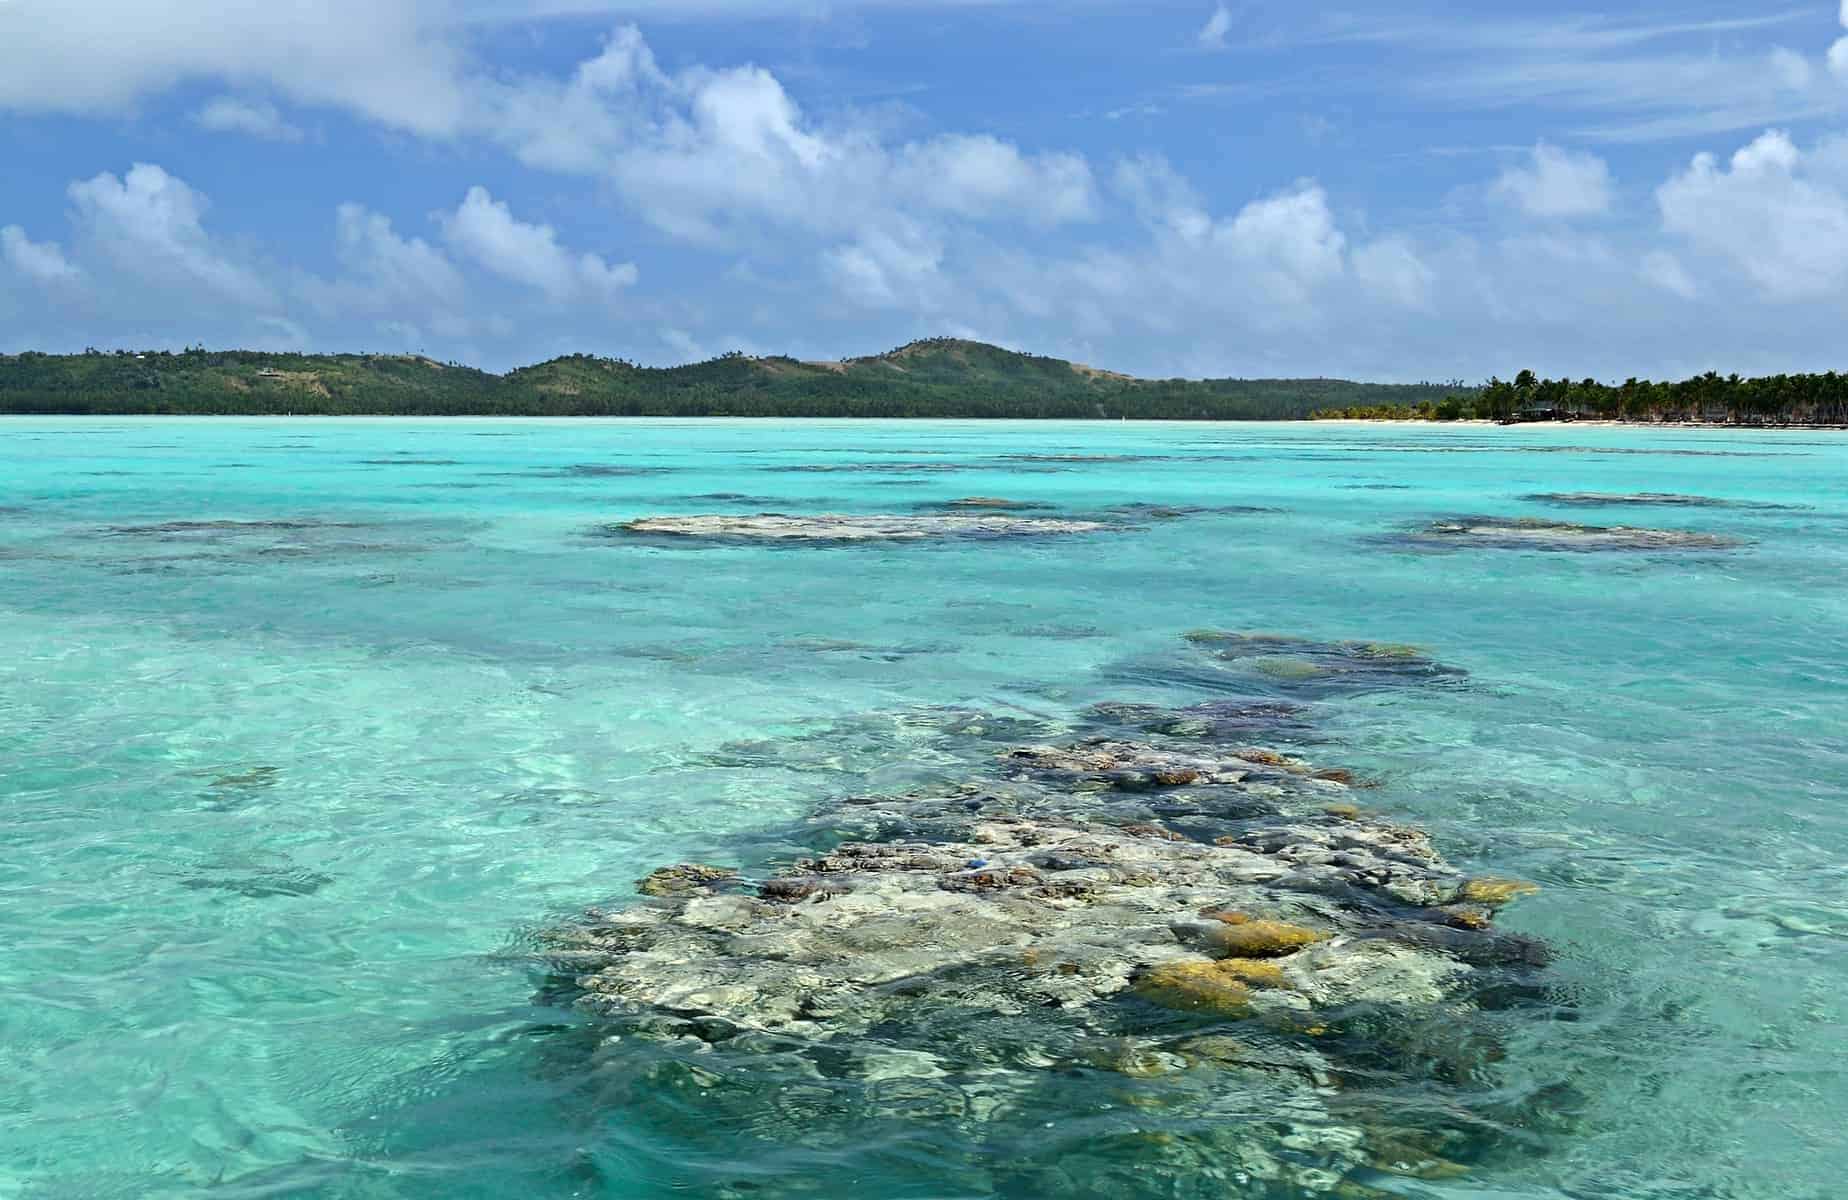 Cooks islands